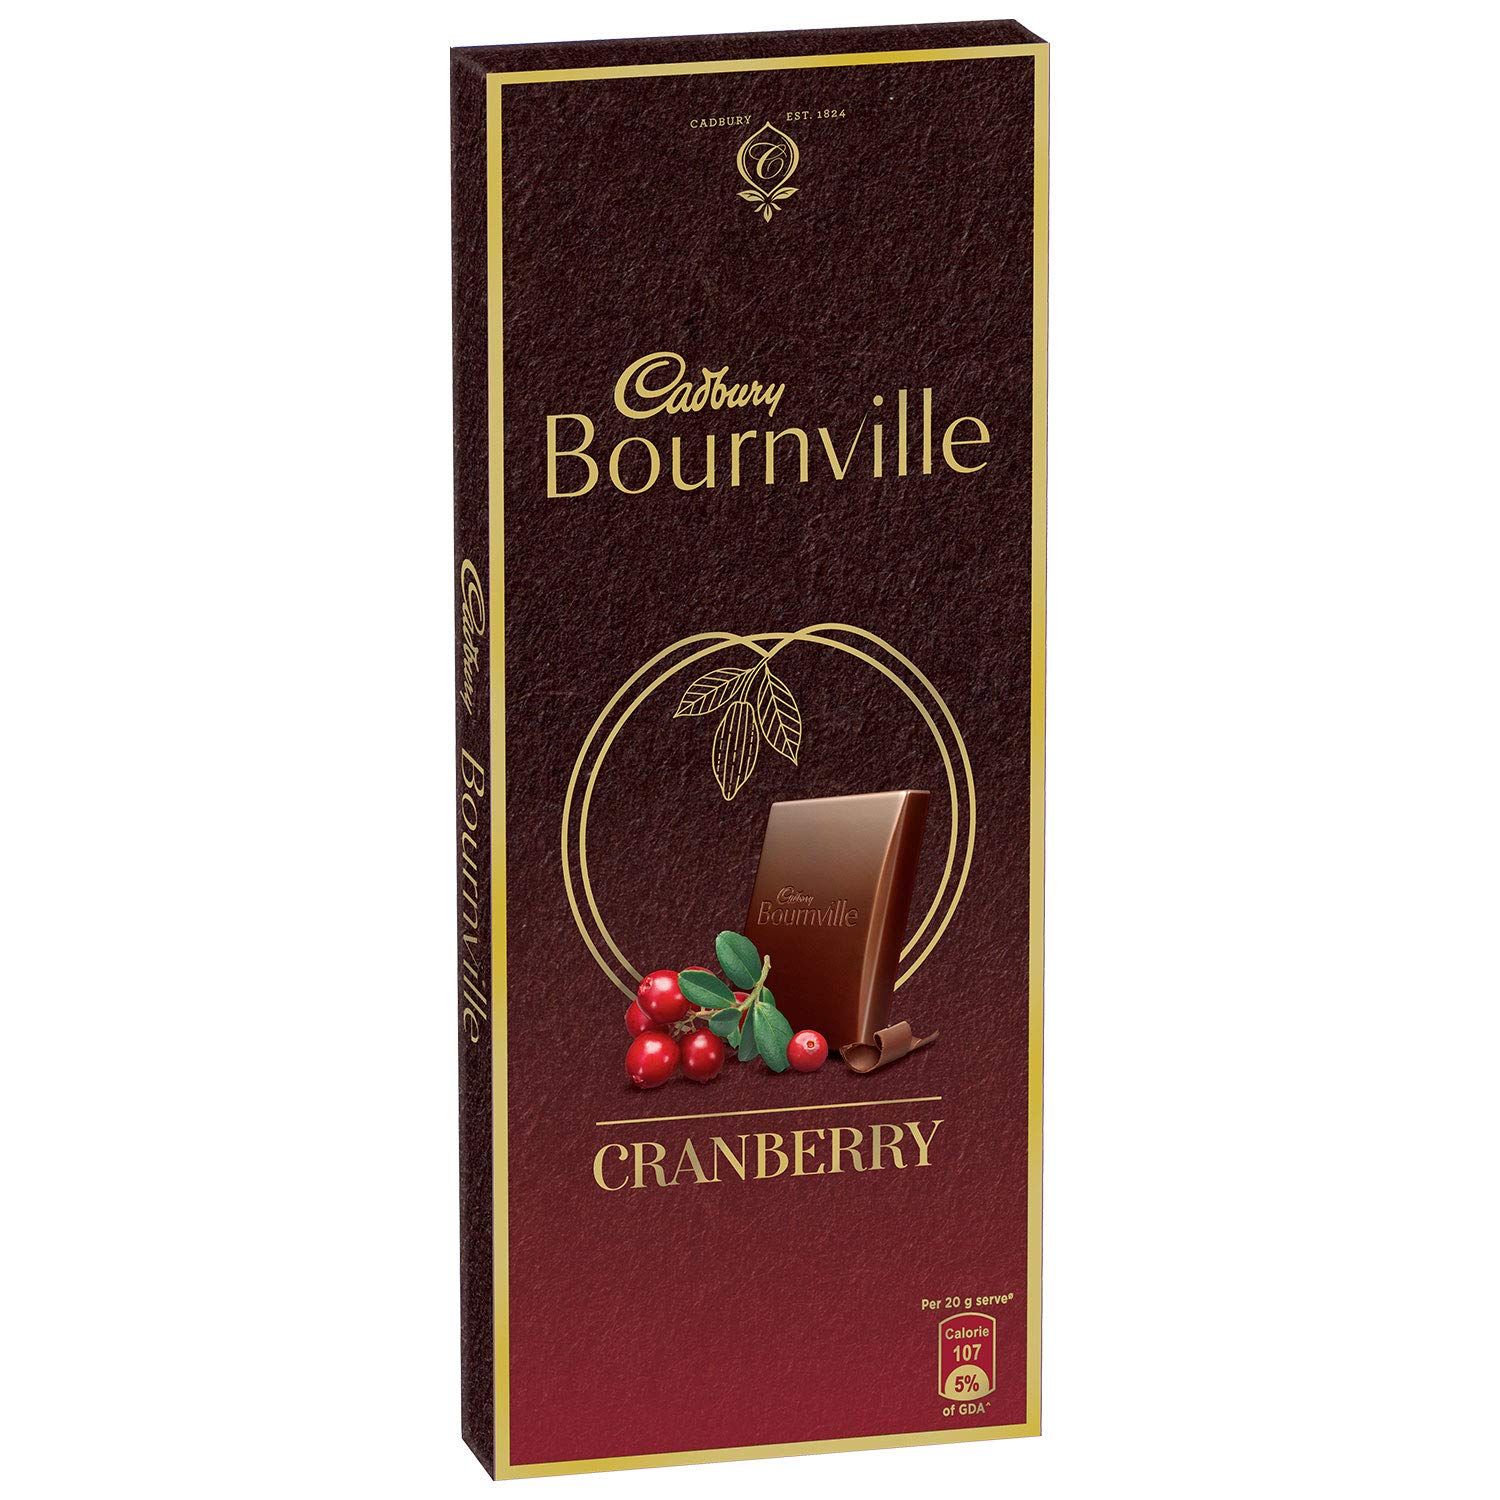 Cadbury Bournville Cranberry Dark Chocolate Bar Image